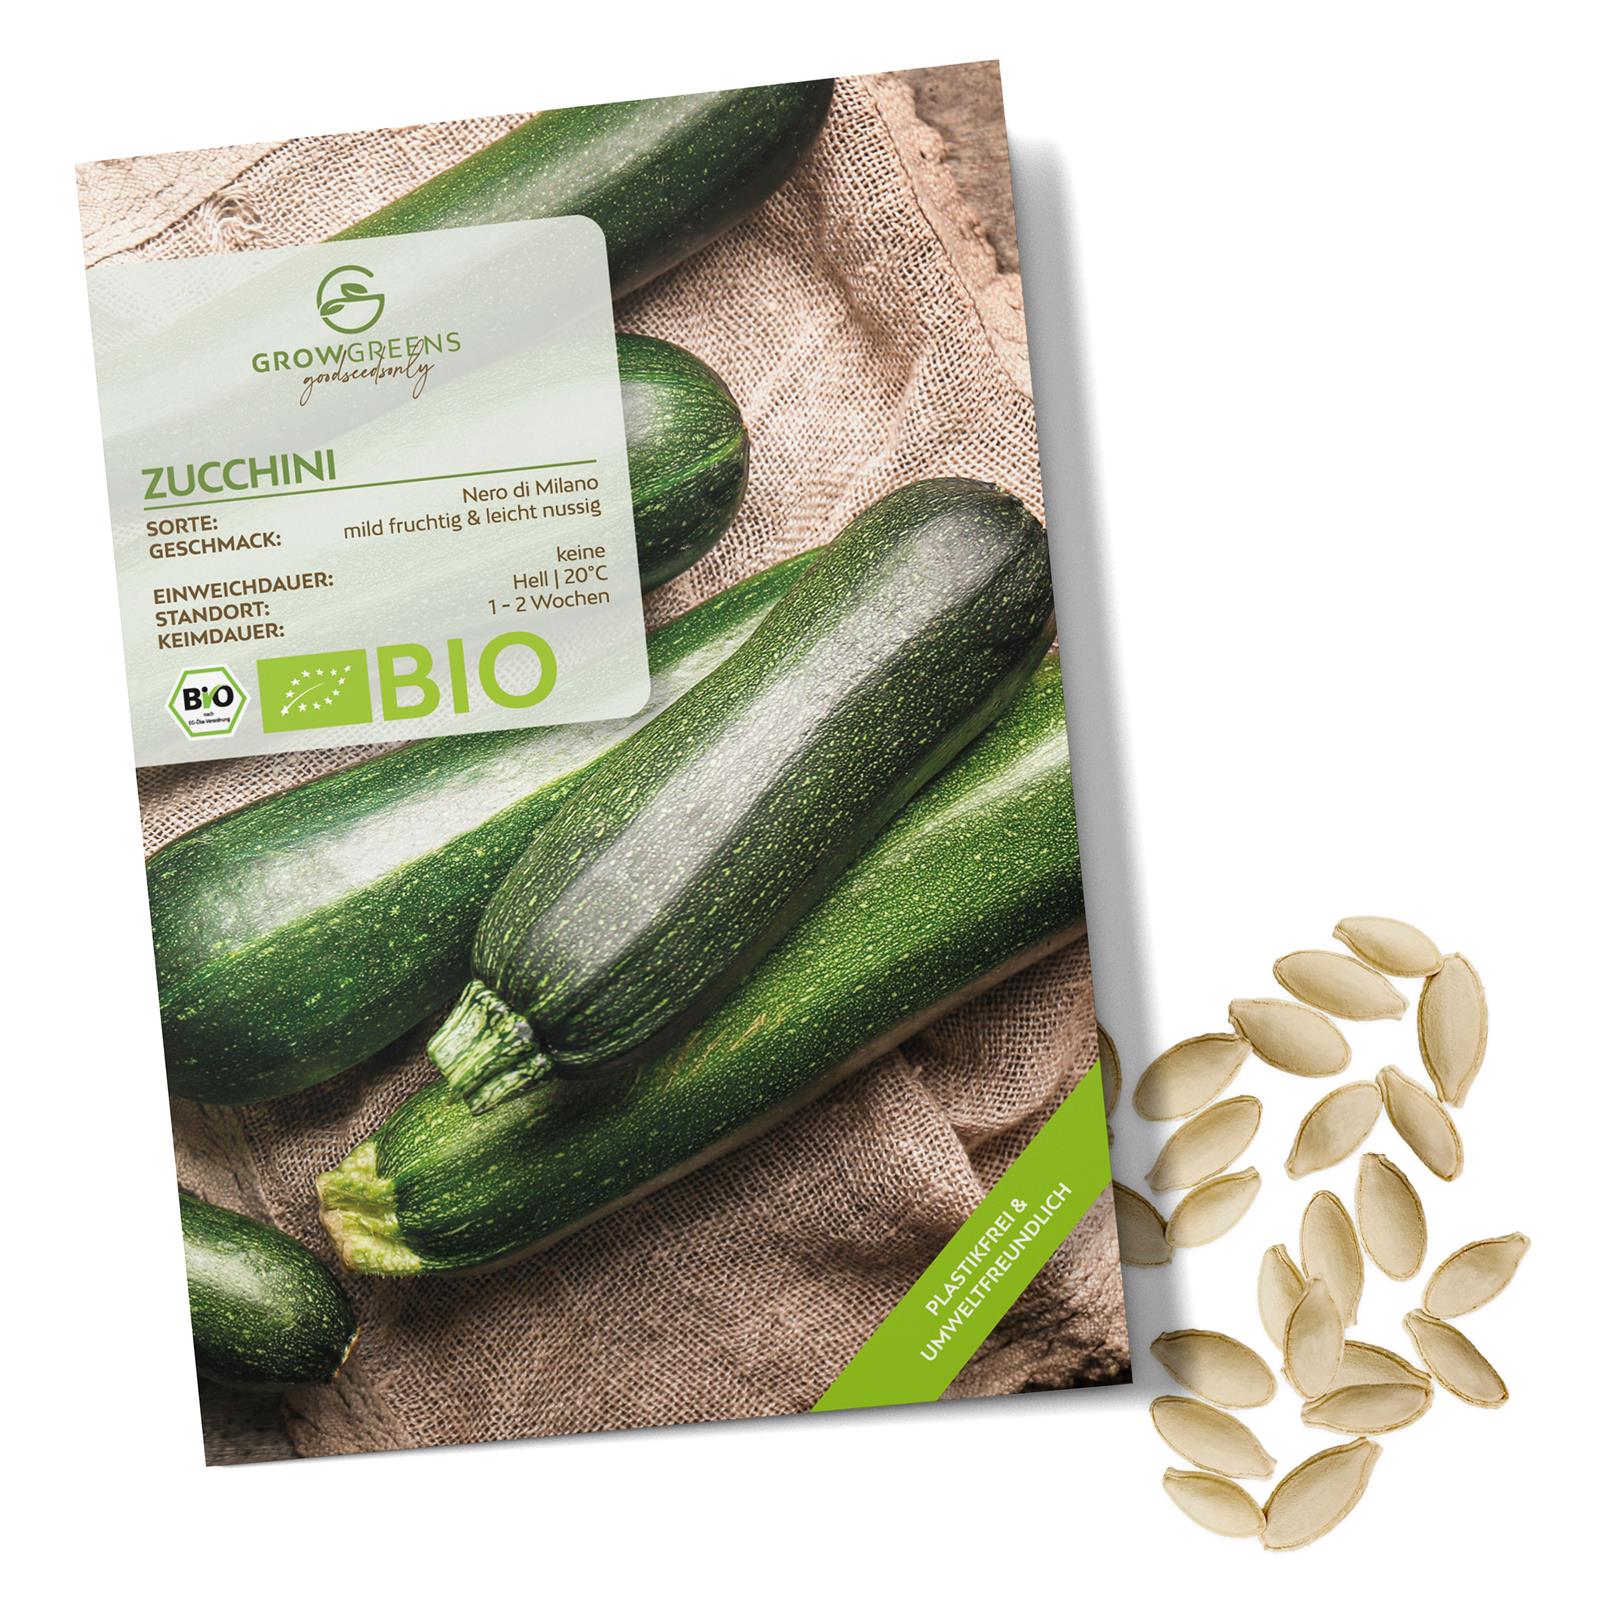 BIO Zucchini Samen (Nero di Milano) - Zucchini Saatgut aus biologischem Anbau (5 Korn)